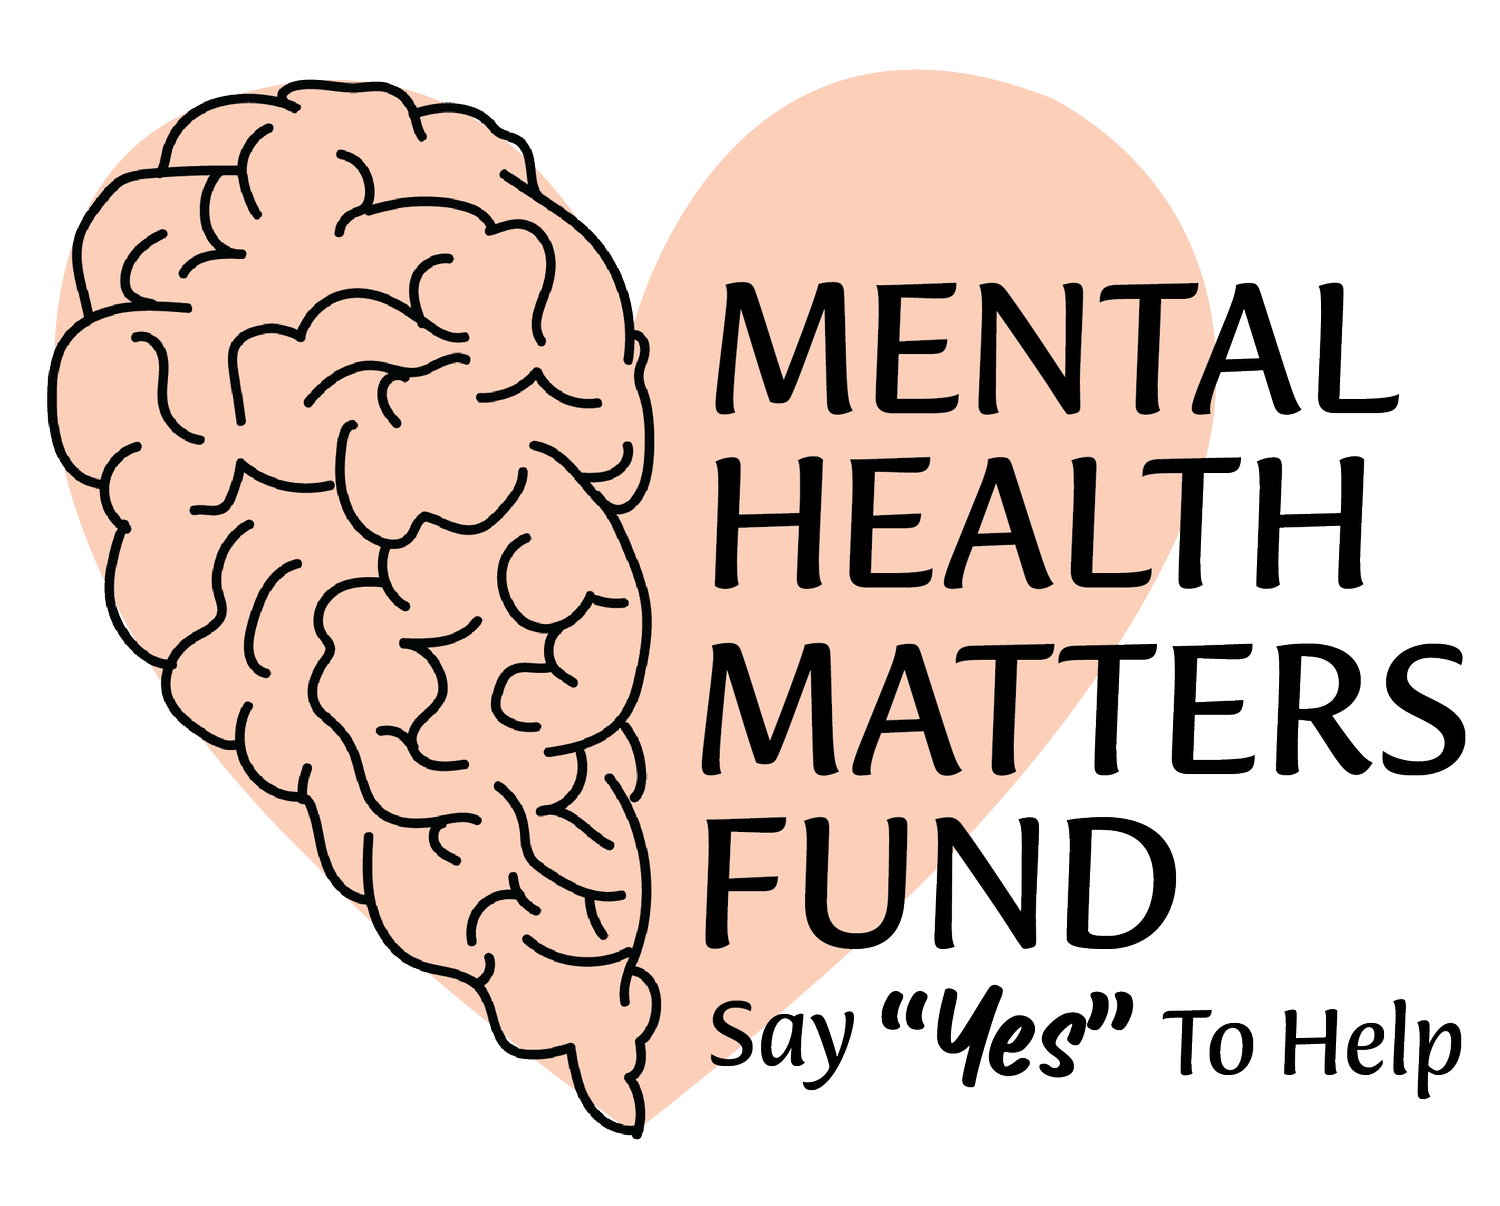 Mental Health Matters Fund